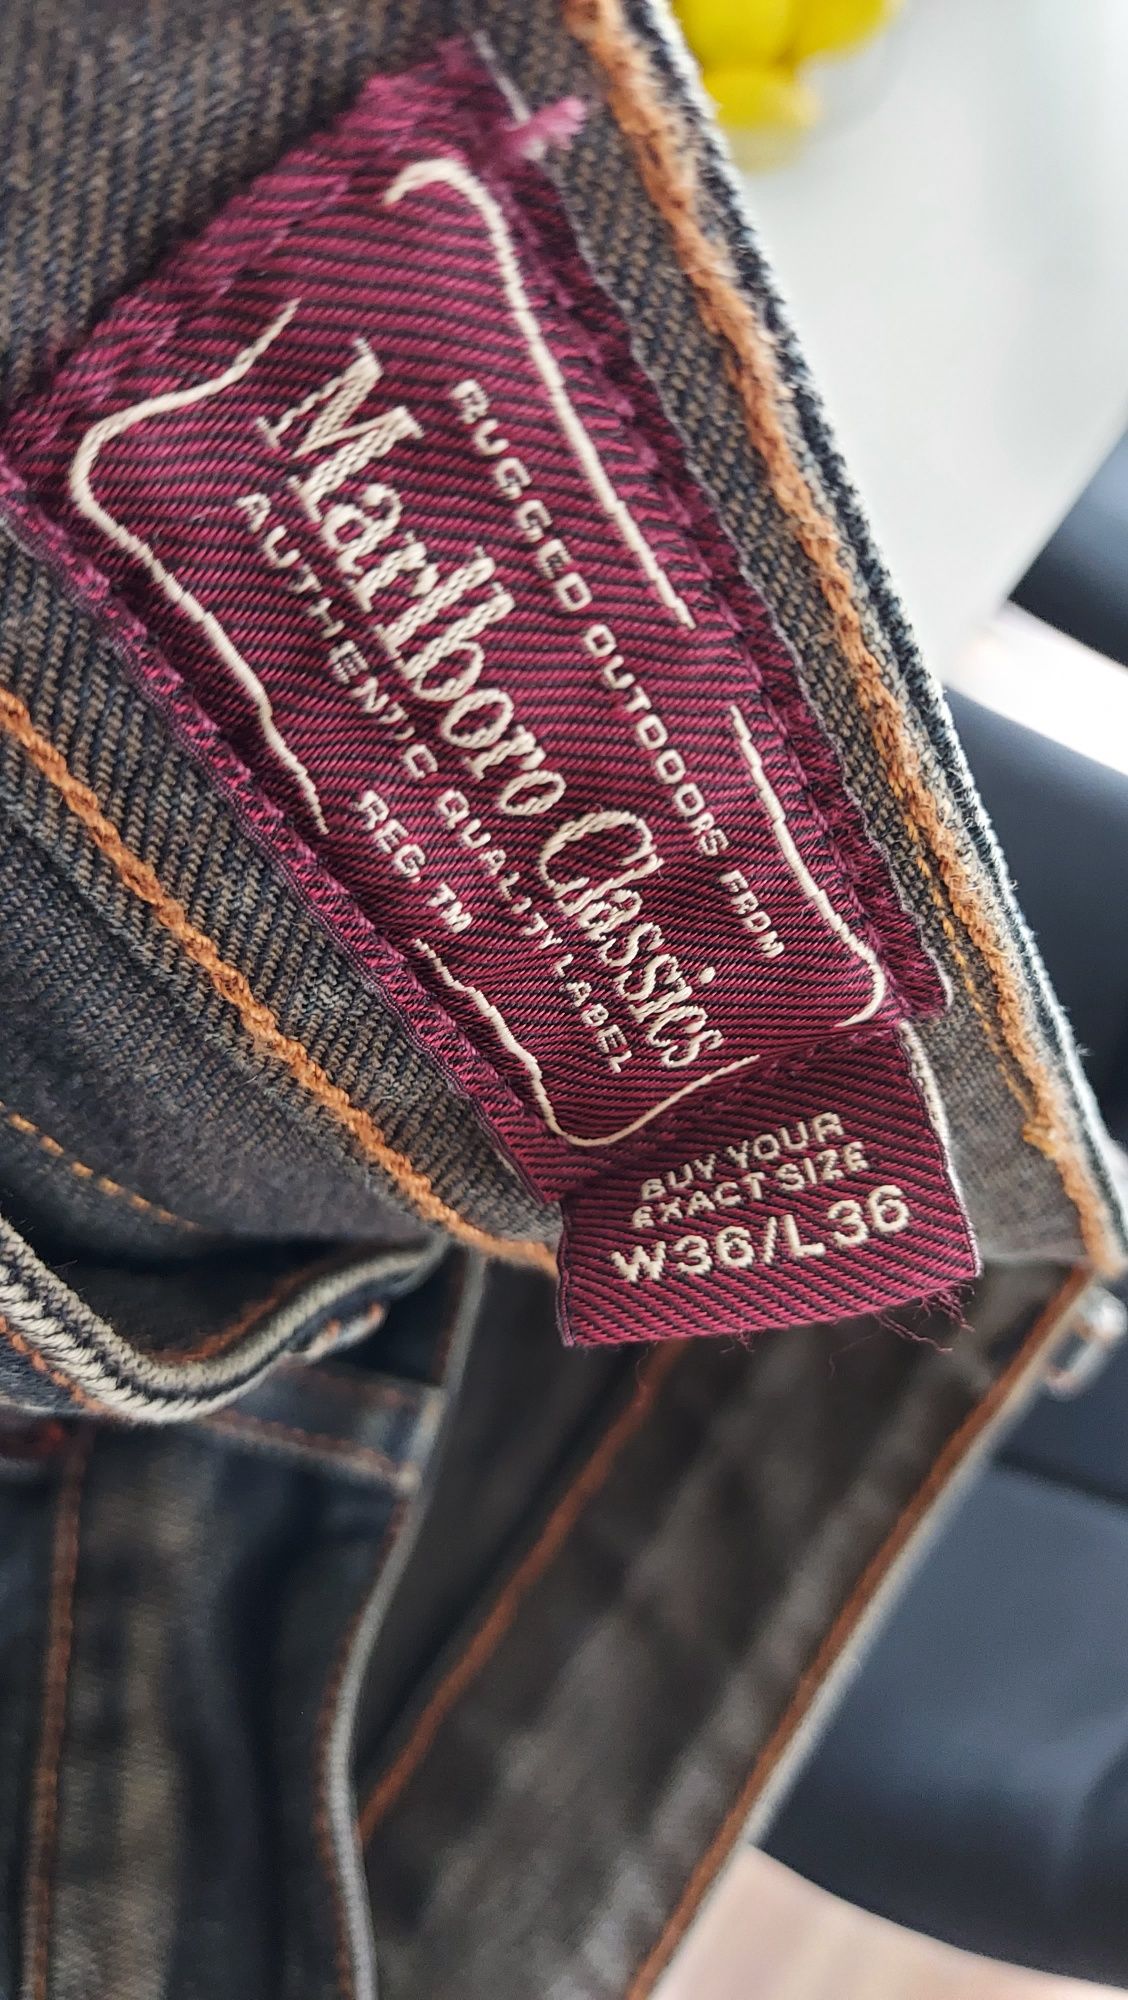 Spodnie jeansy Malboro classic W36L36 vintage